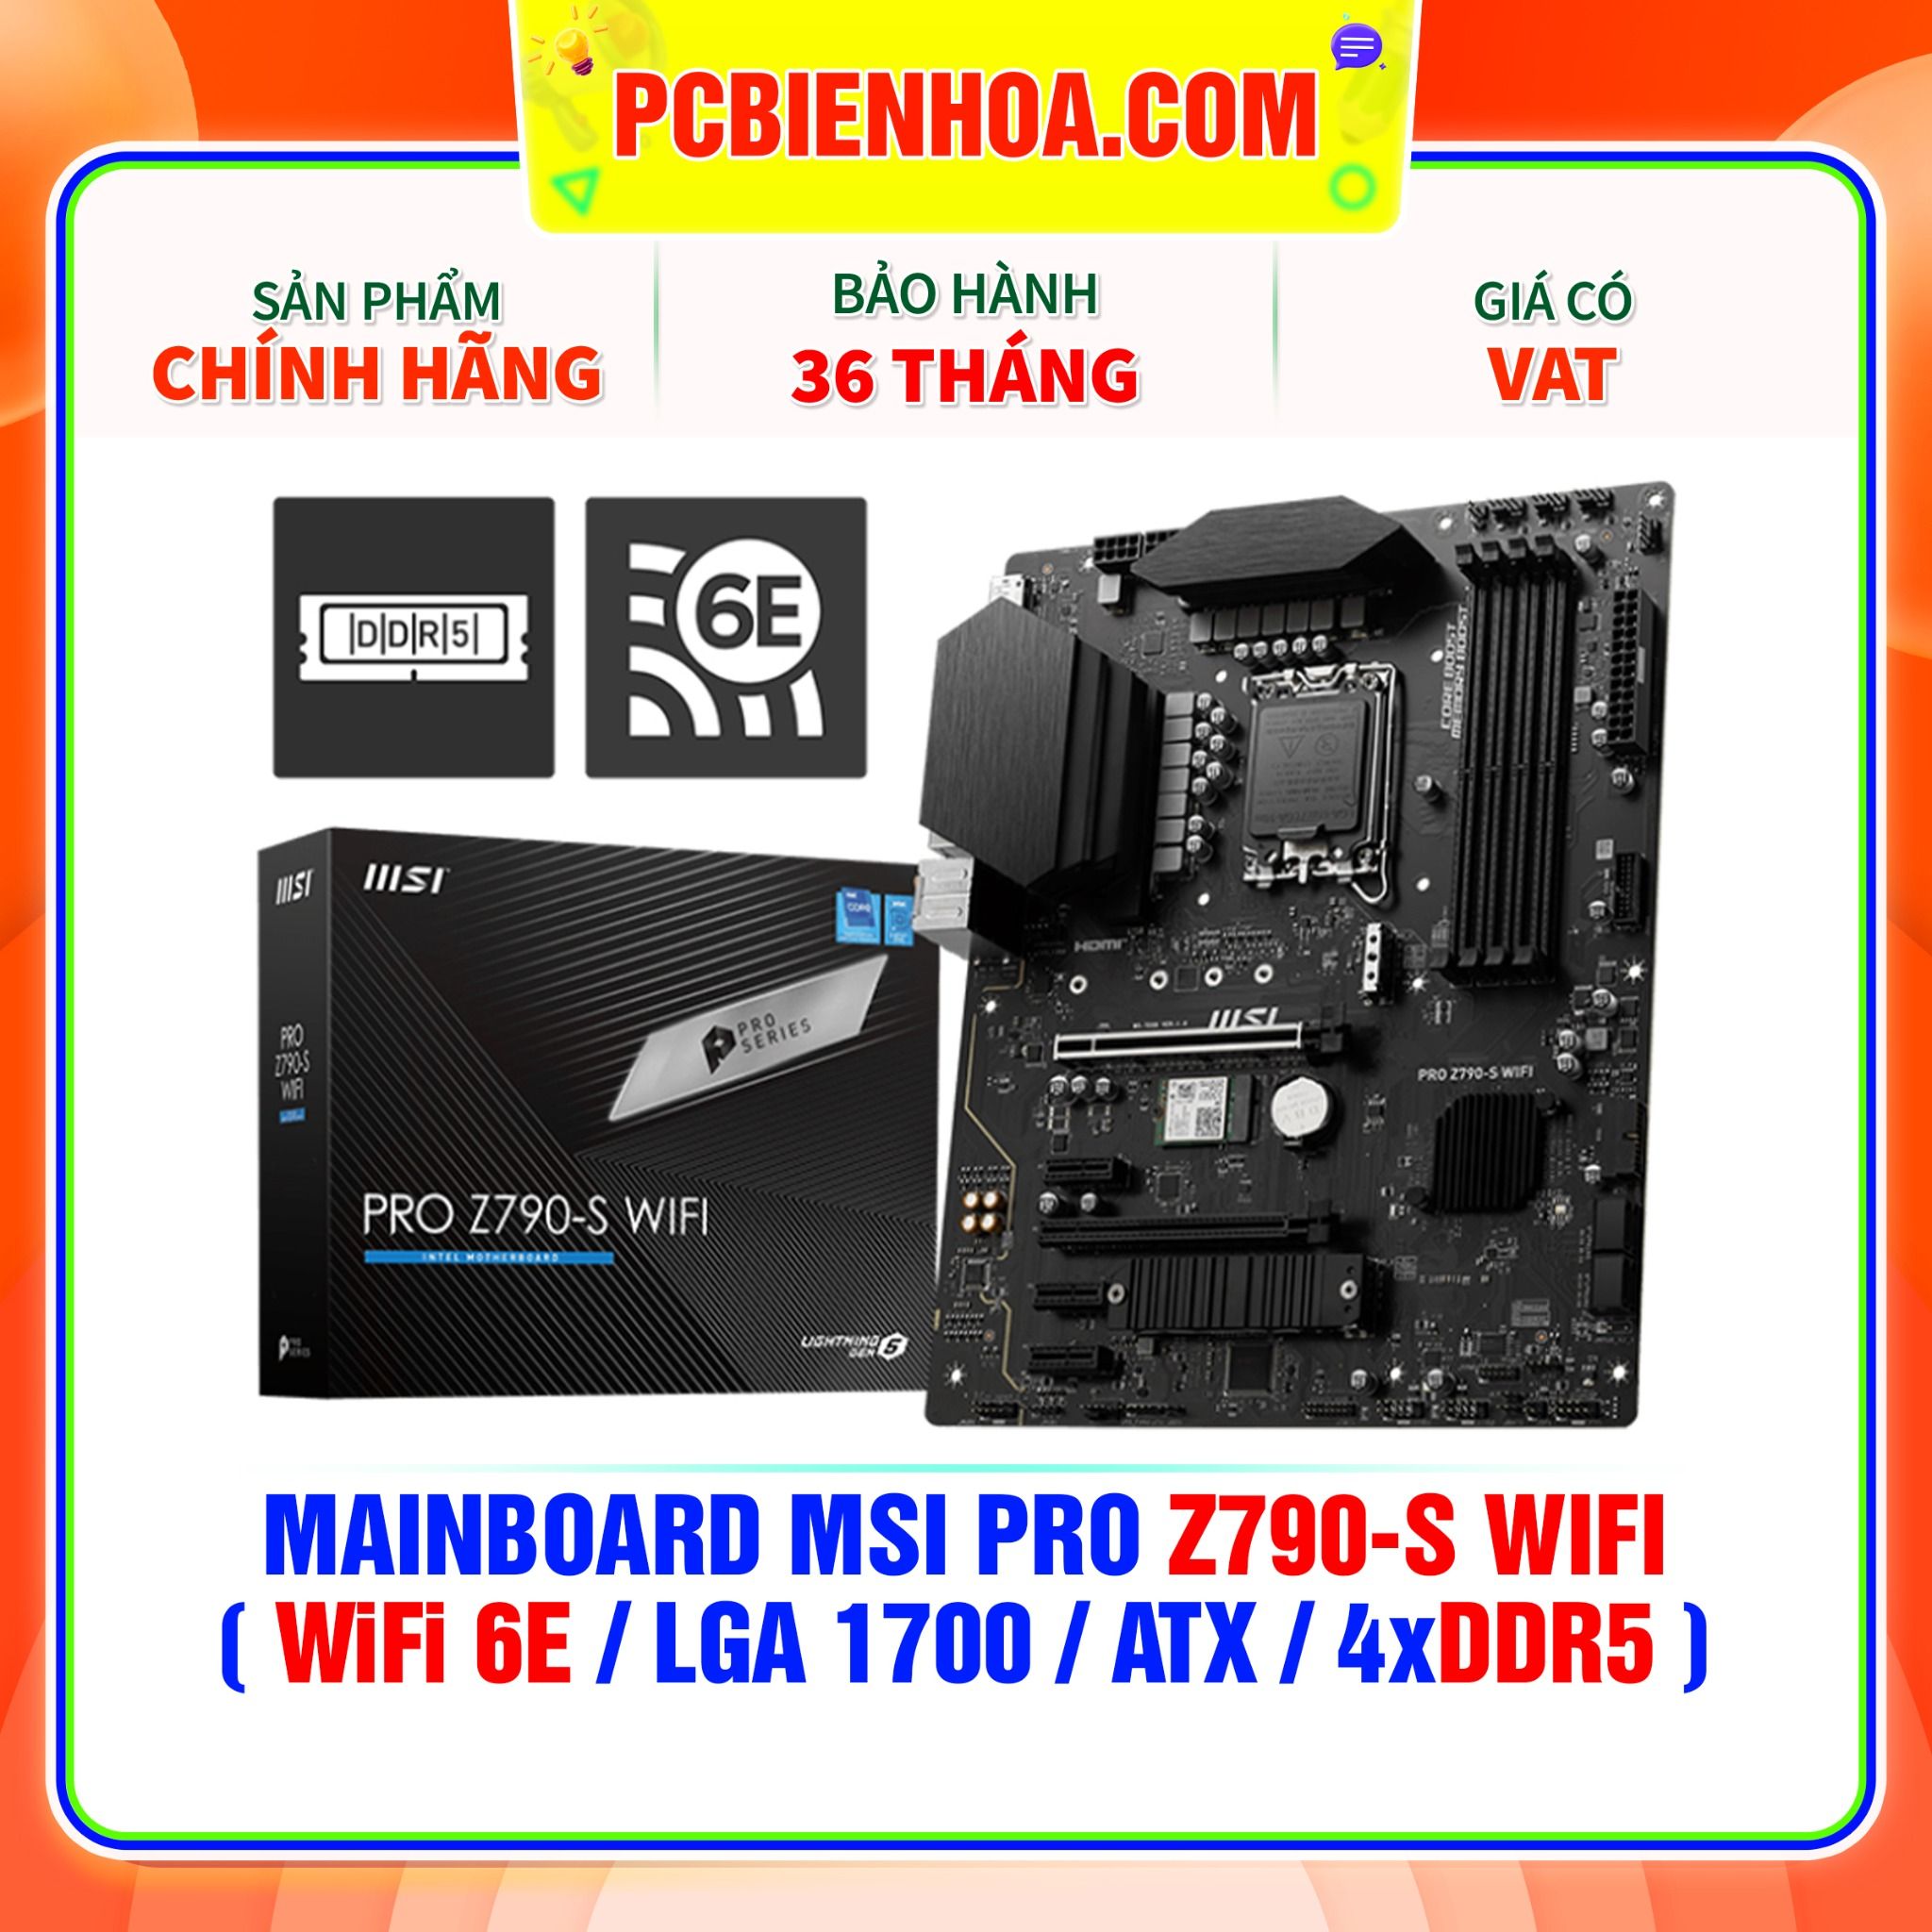  DDR5 - MAINBOARD MSI PRO Z790-S WIFI ( WiFi 6E / LGA 1700 / ATX / 4xDDR5 ) 